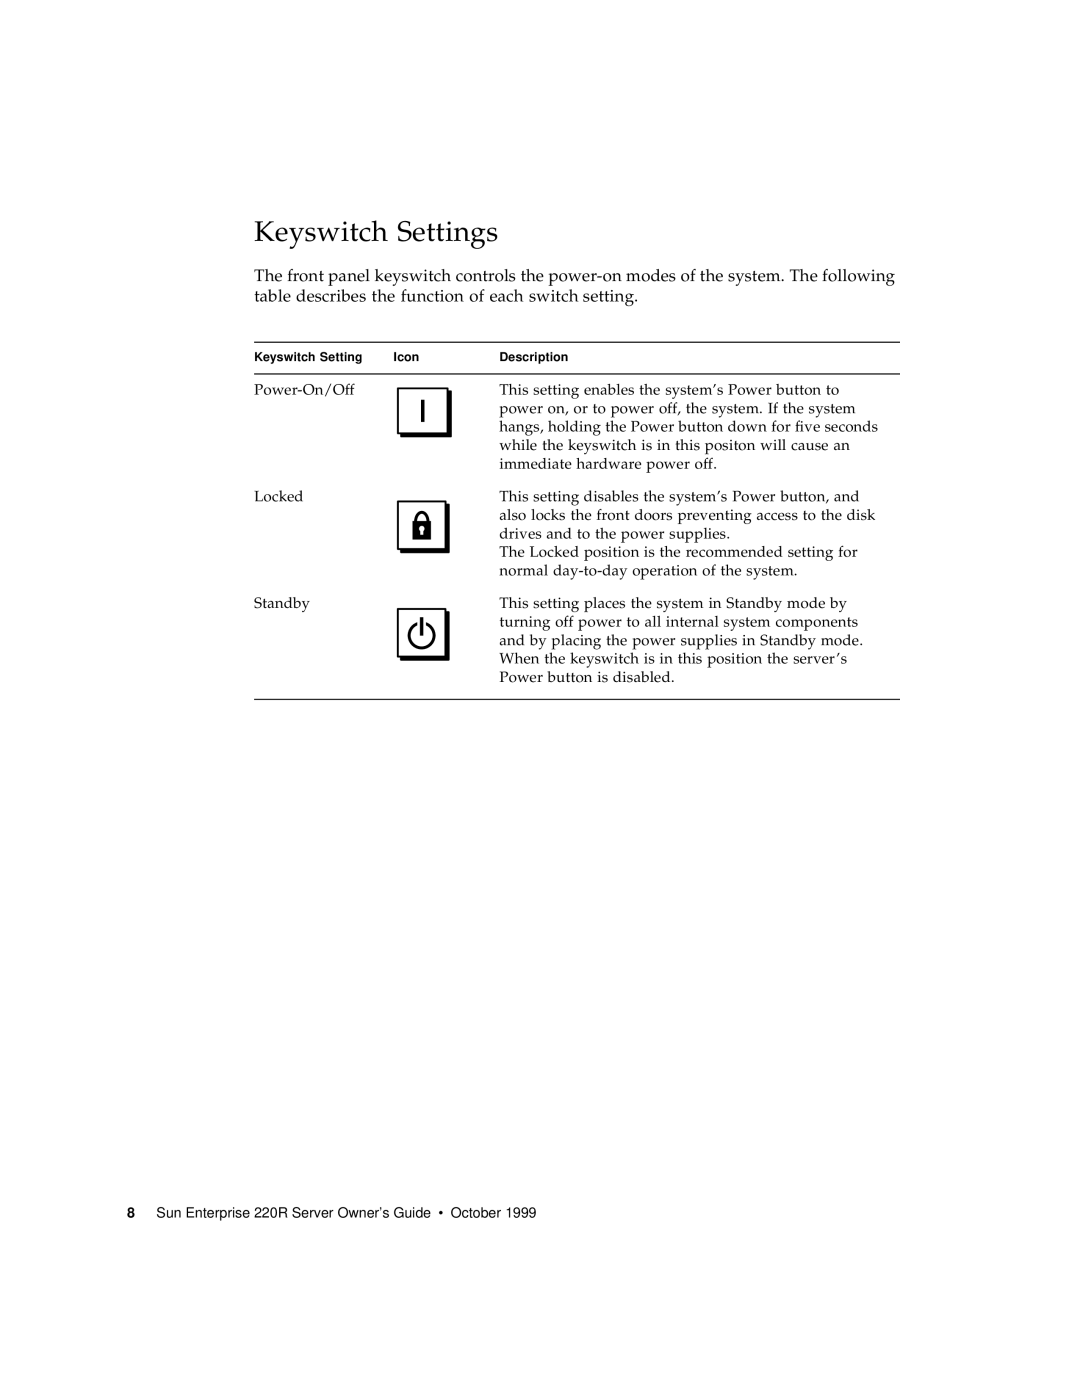 Sun Microsystems 220R manual Keyswitch Settings 